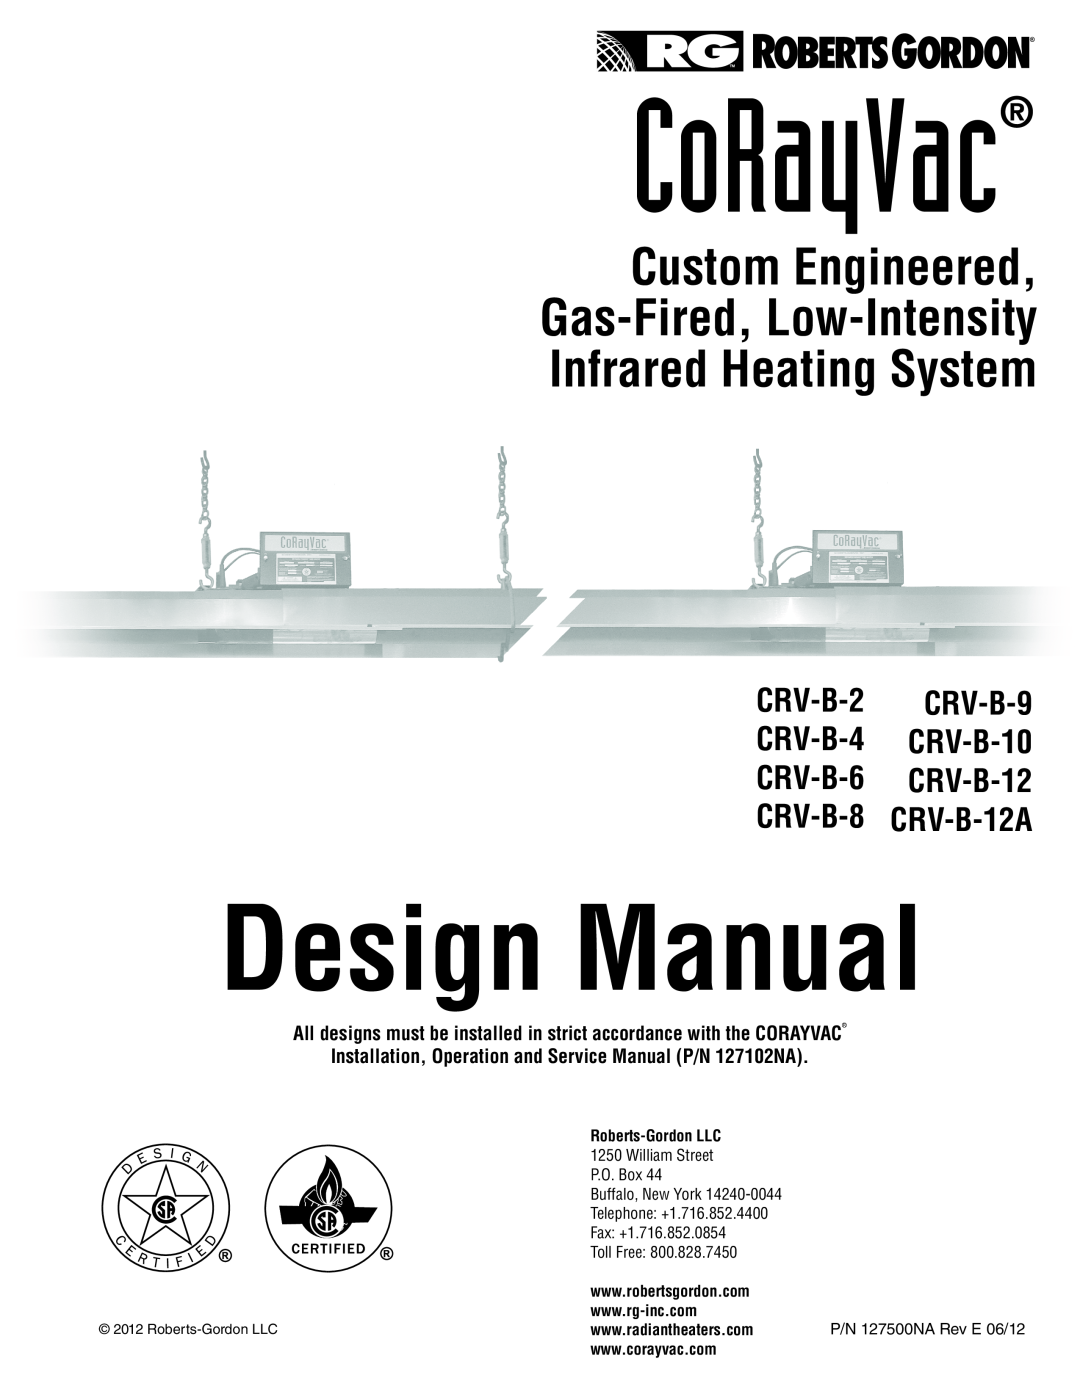 Roberts Gorden CRV-B-9 service manual Design Manual, CoRayVac, Gas-Fired, Low-Intensity, Custom Engineered 